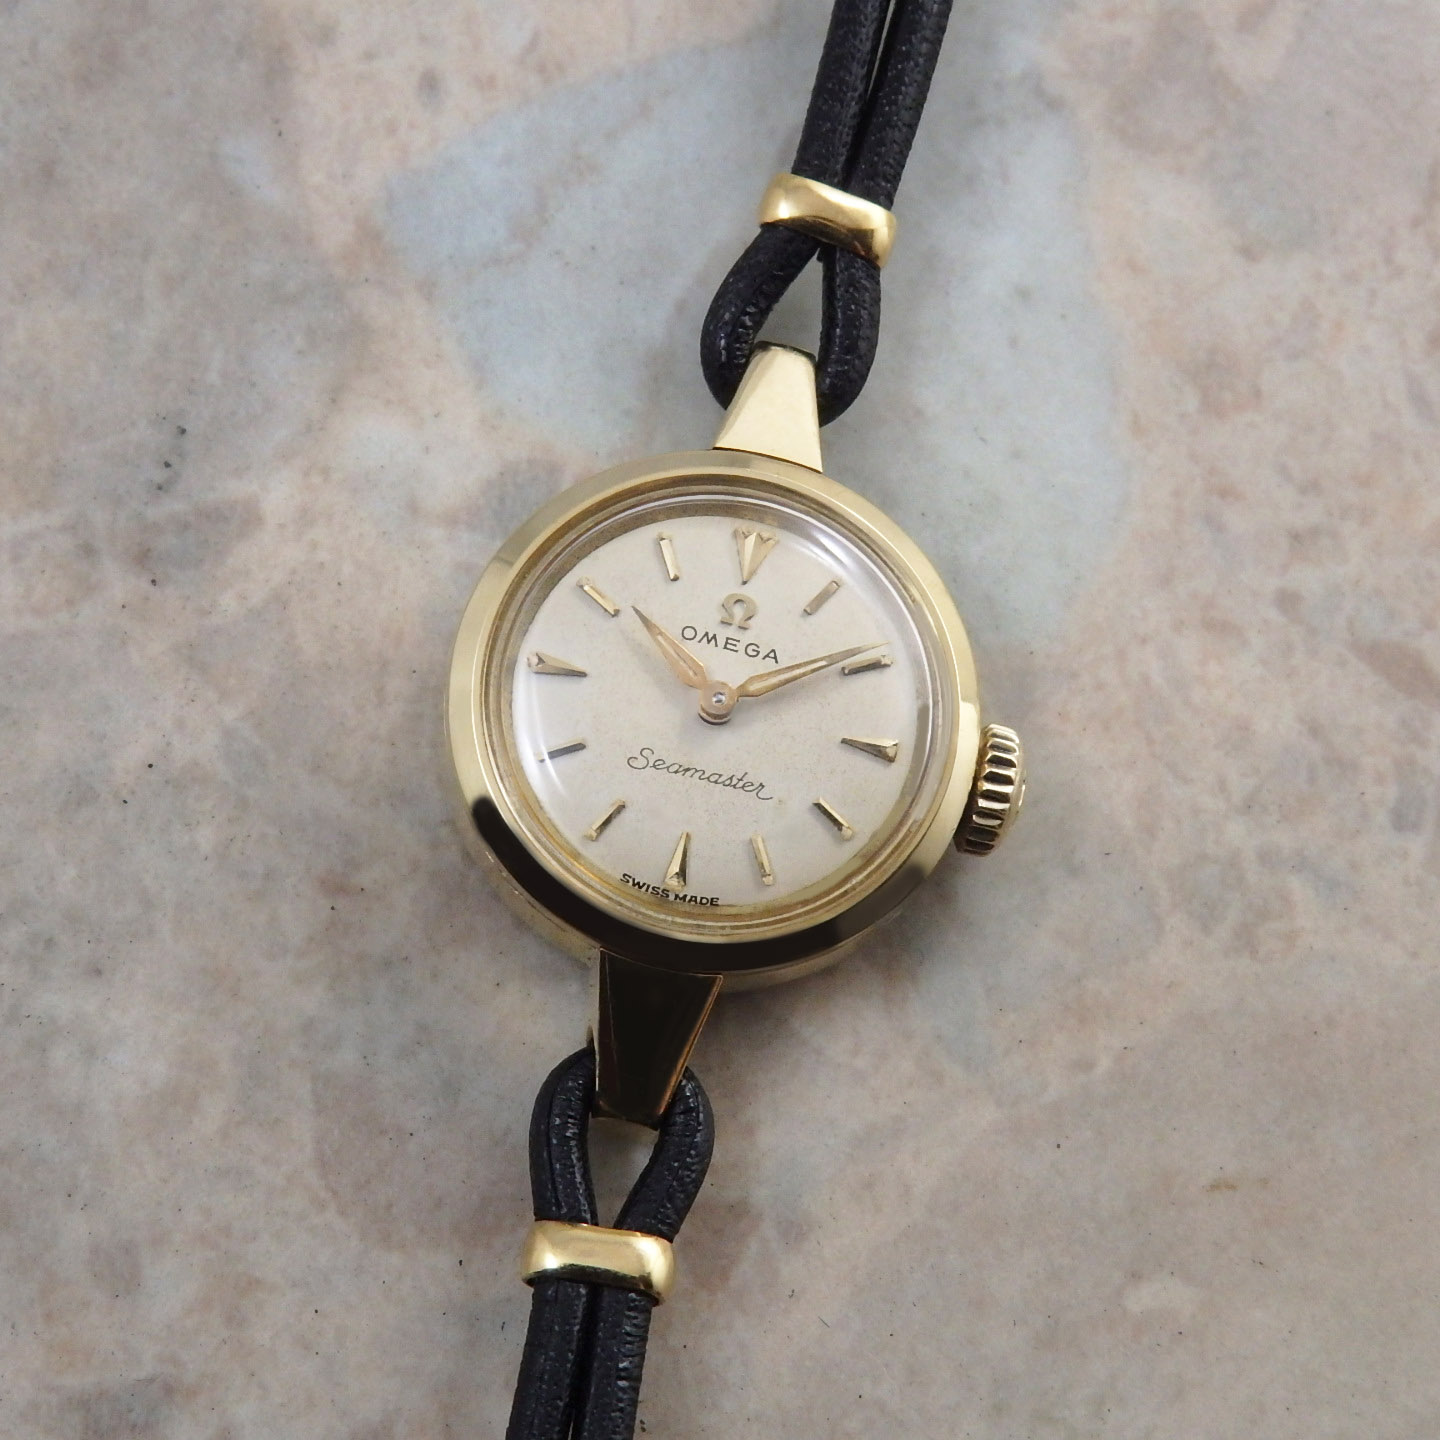 18k18金無垢オメガアンティークレディマティック手巻き腕時計OMEGA2489